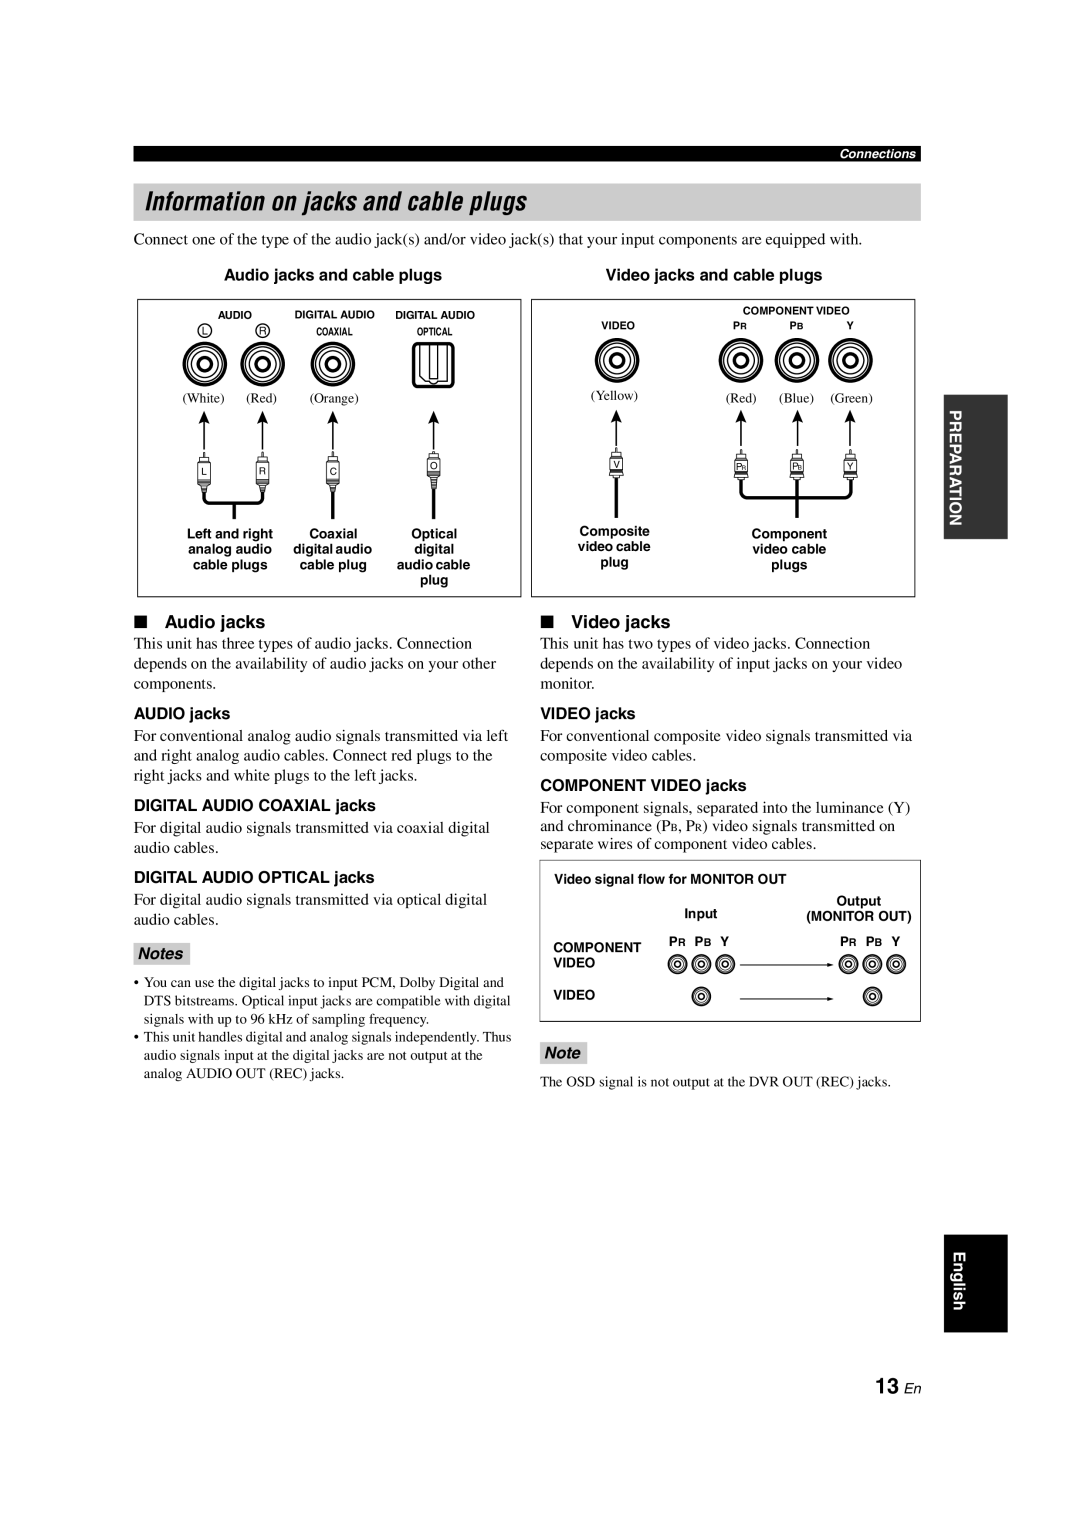 Yamaha HTR-6140 owner manual Information on jacks and cable plugs, 13 En, Audio jacks, Video jacks, Notes 